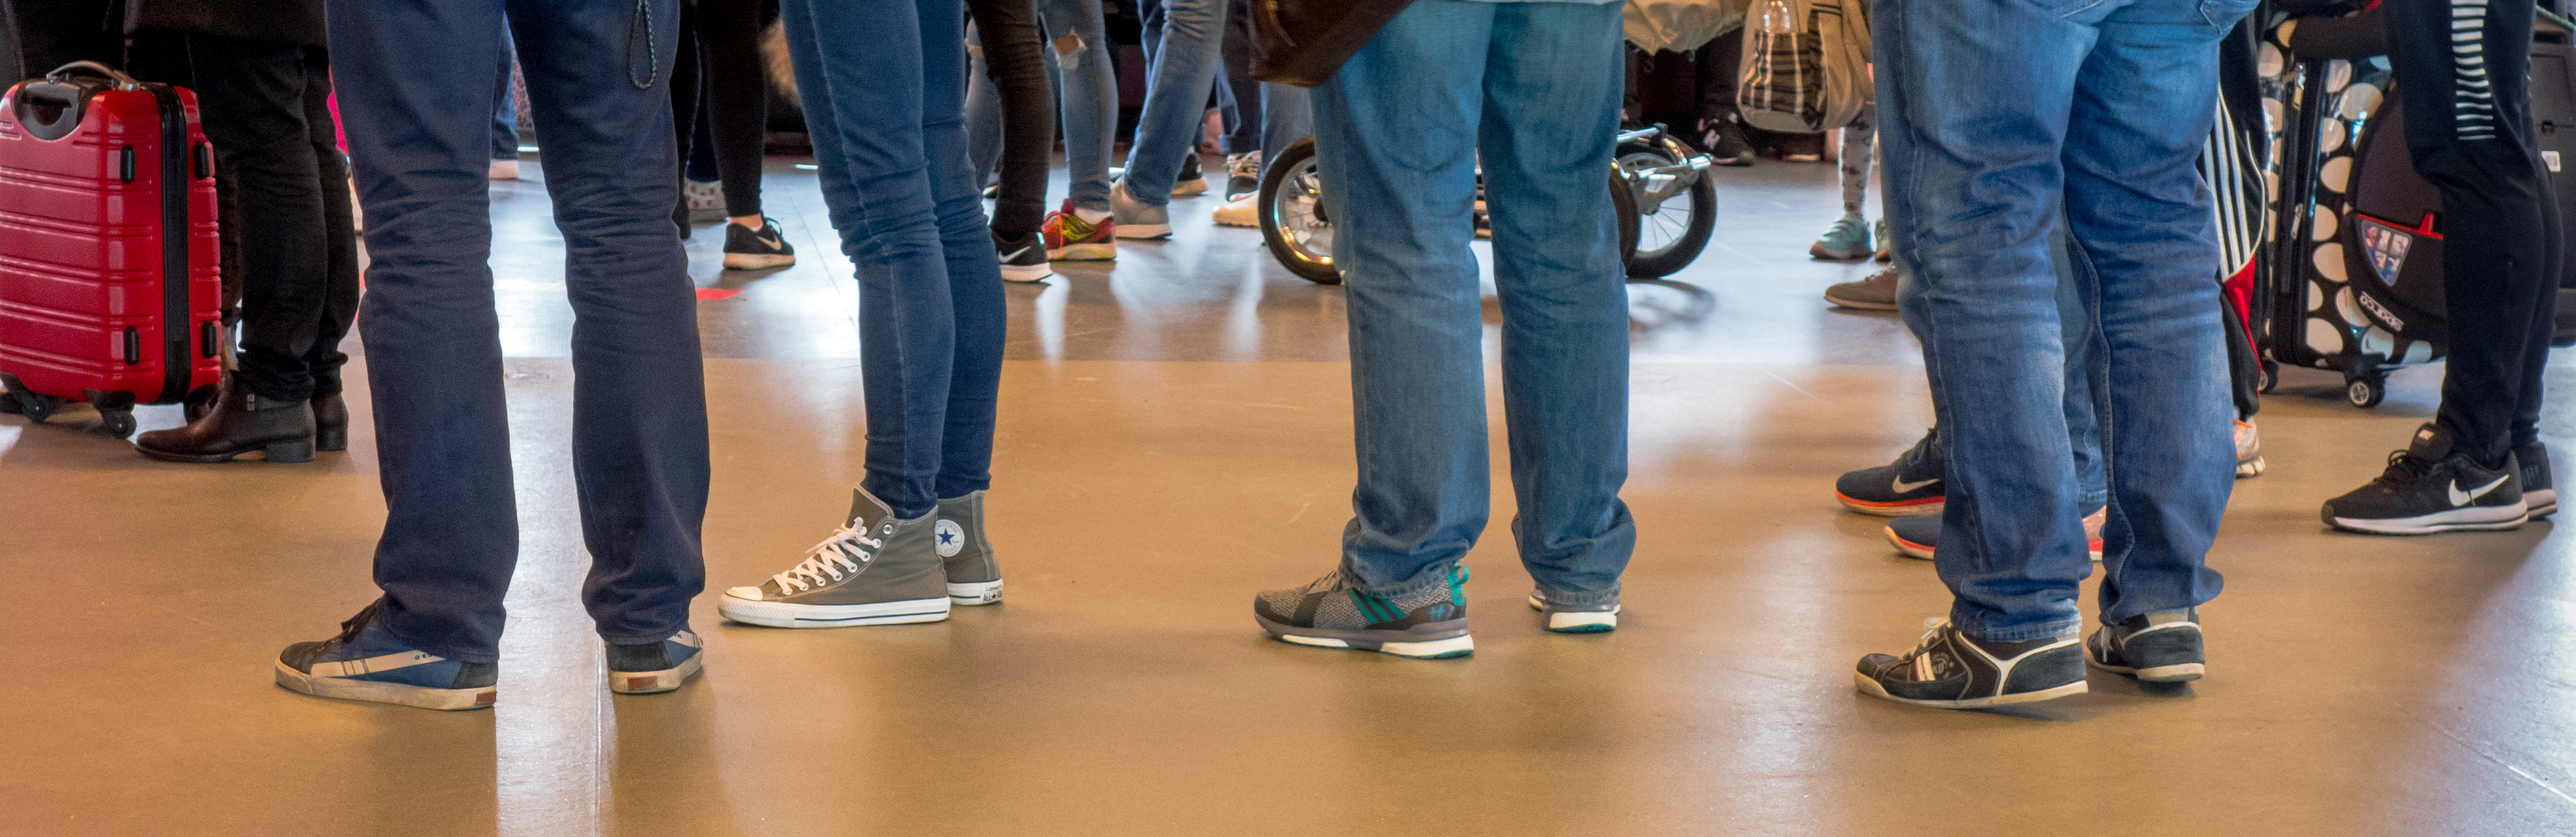 People waiting in line at Stena Line terminal, Frederikshavn, Jeans, Legs, Line, People, HQ Photo